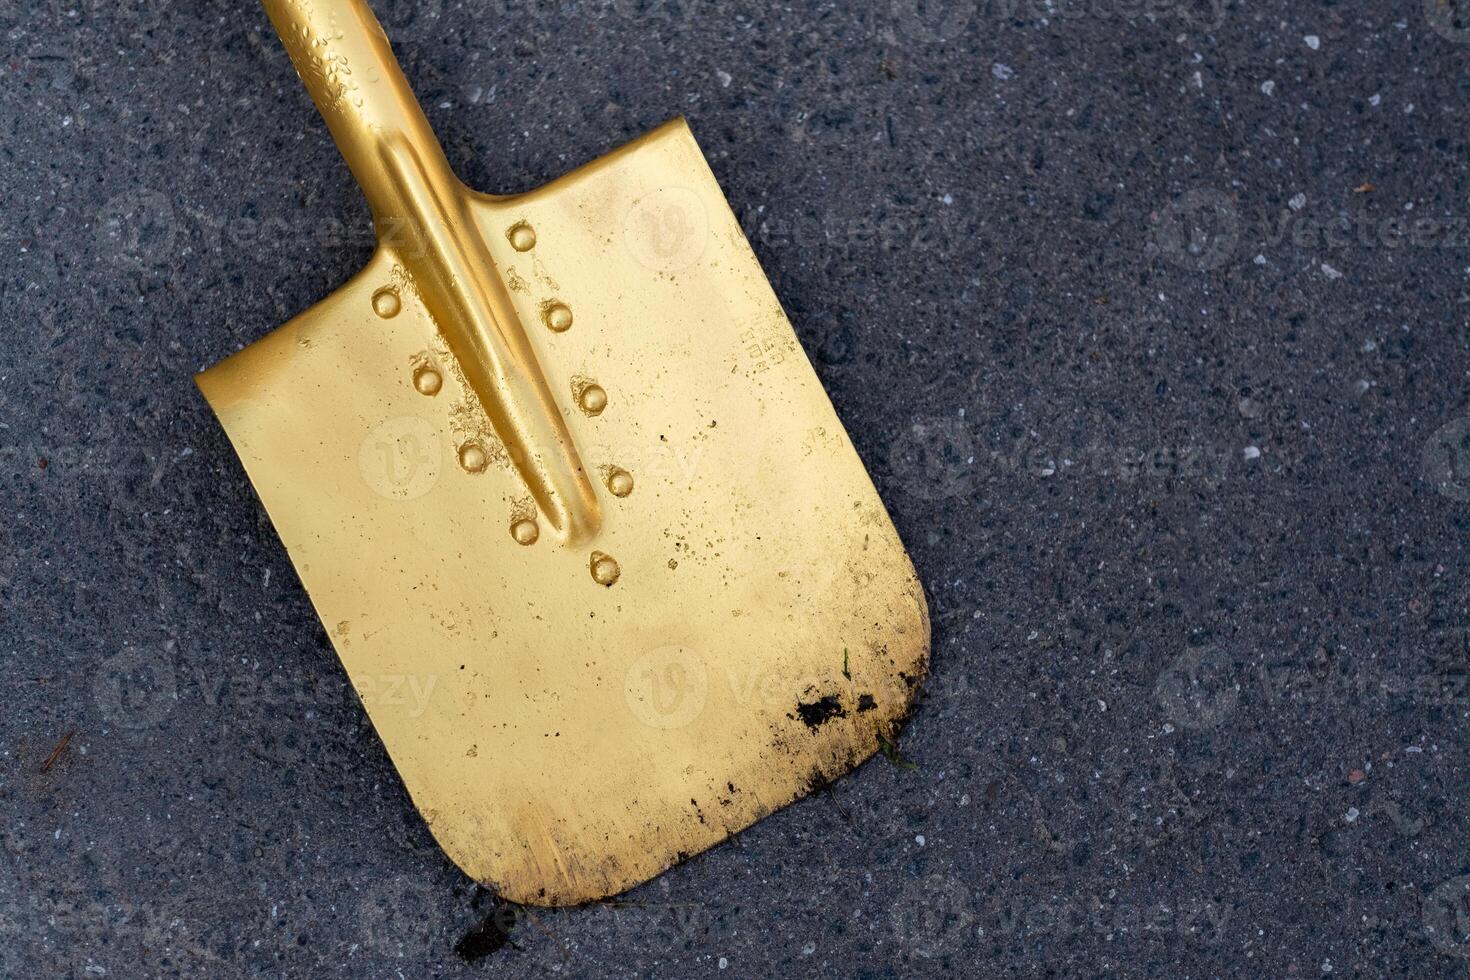 A golden shovel is lying on the asphalt.Opening Ceremony photo